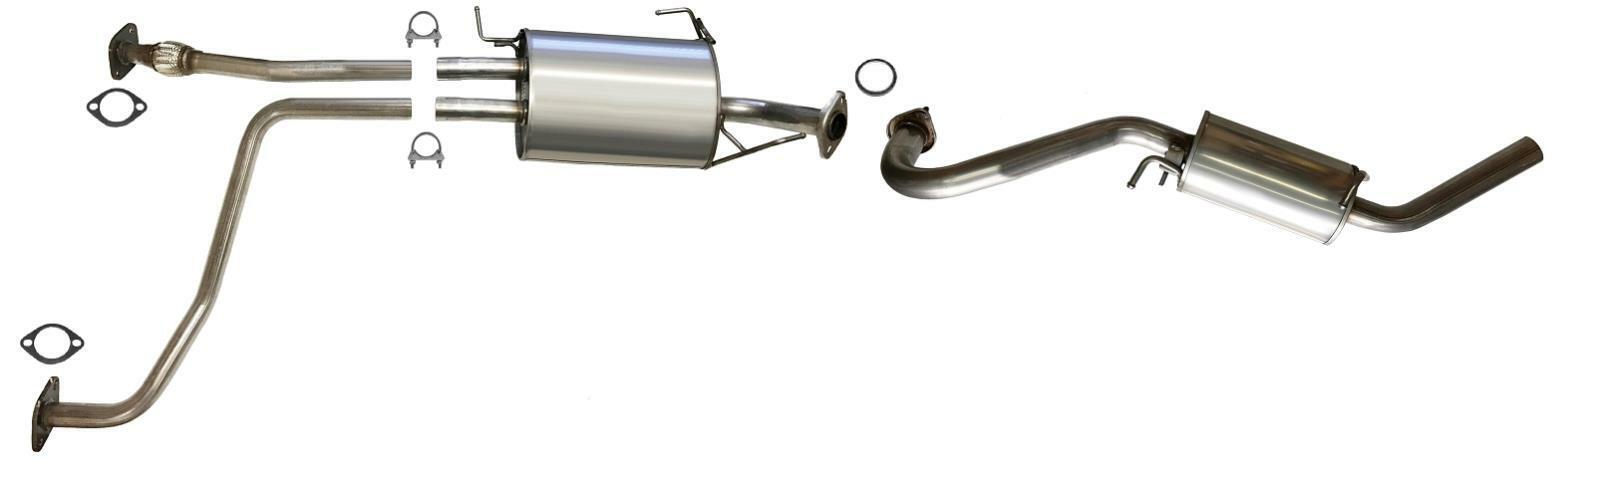 Stainless Steel exhaust kit fits 96 - 00 Nissan Pathfinder 97 - 00 Infiniti QX4